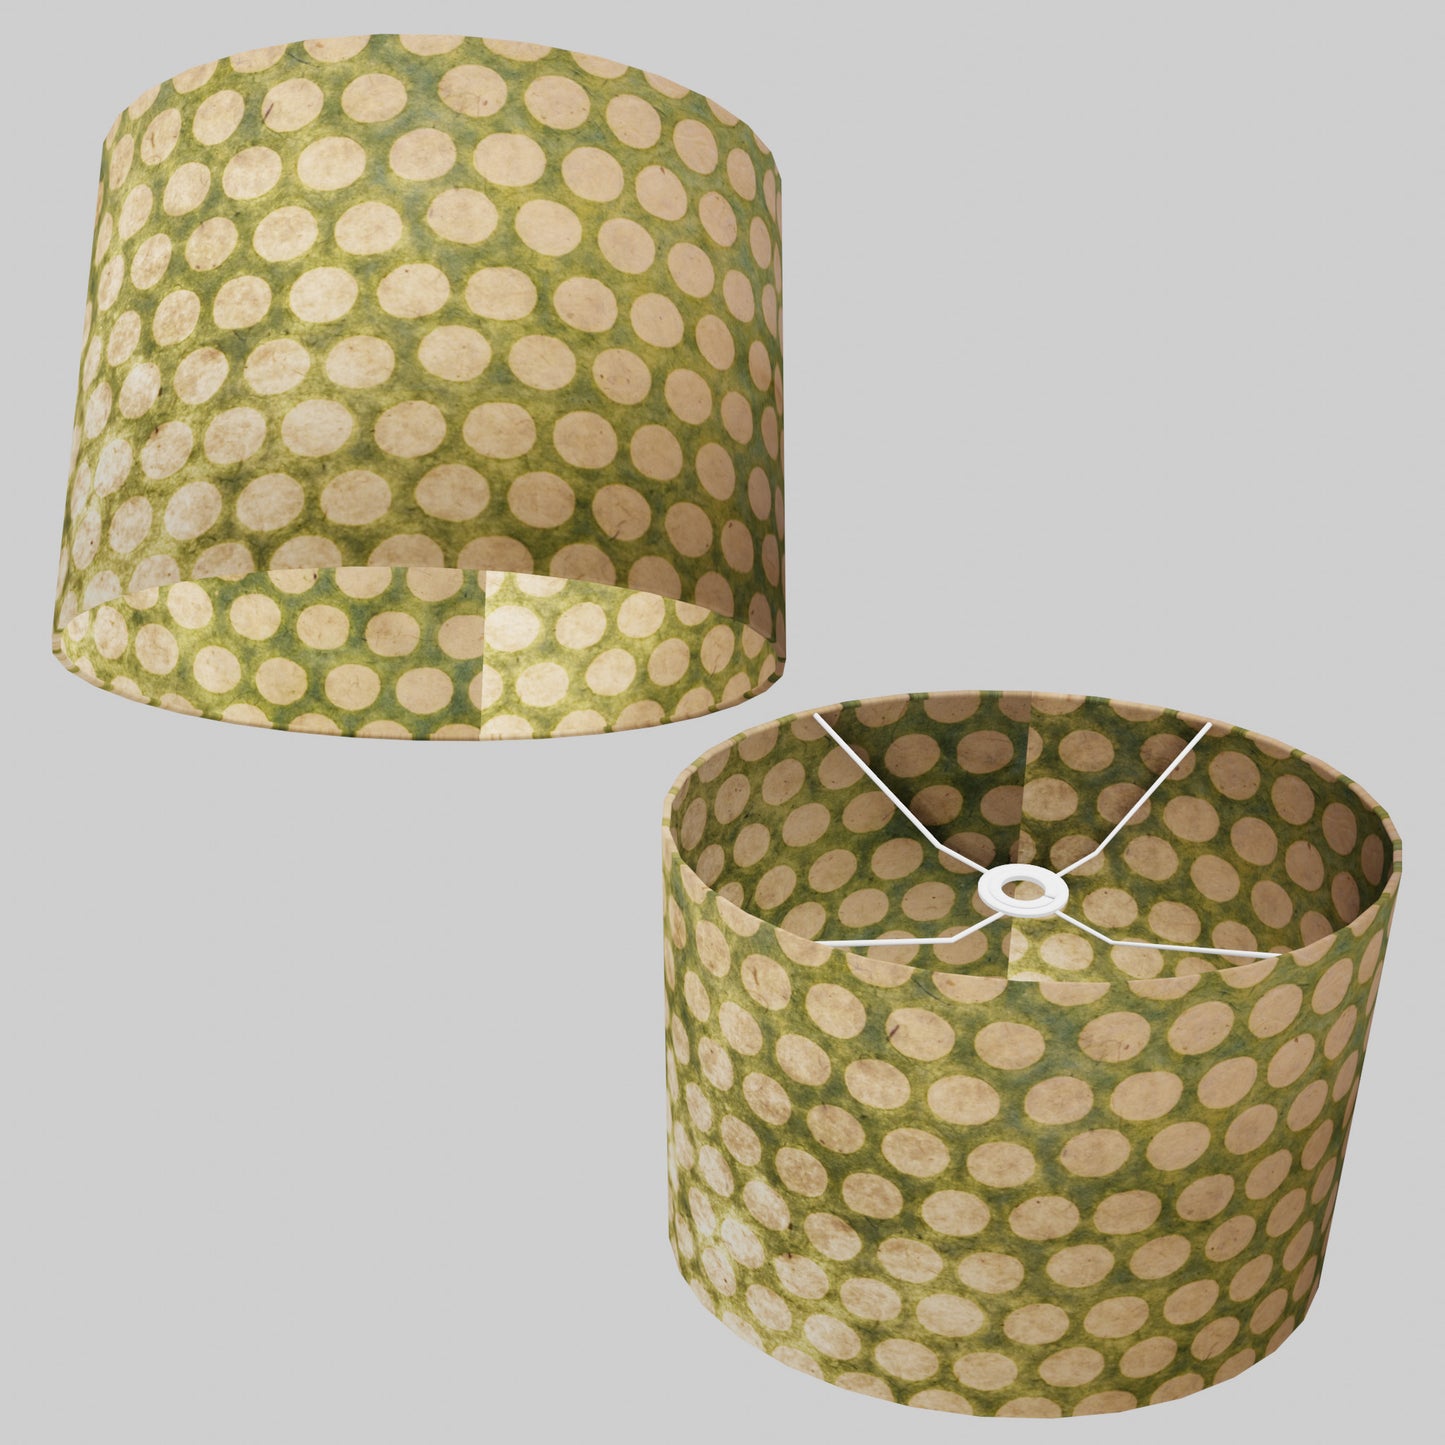 Oval Lamp Shade - P87 ~ Batik Dots on Green, 40cm(w) x 30cm(h) x 30cm(d)